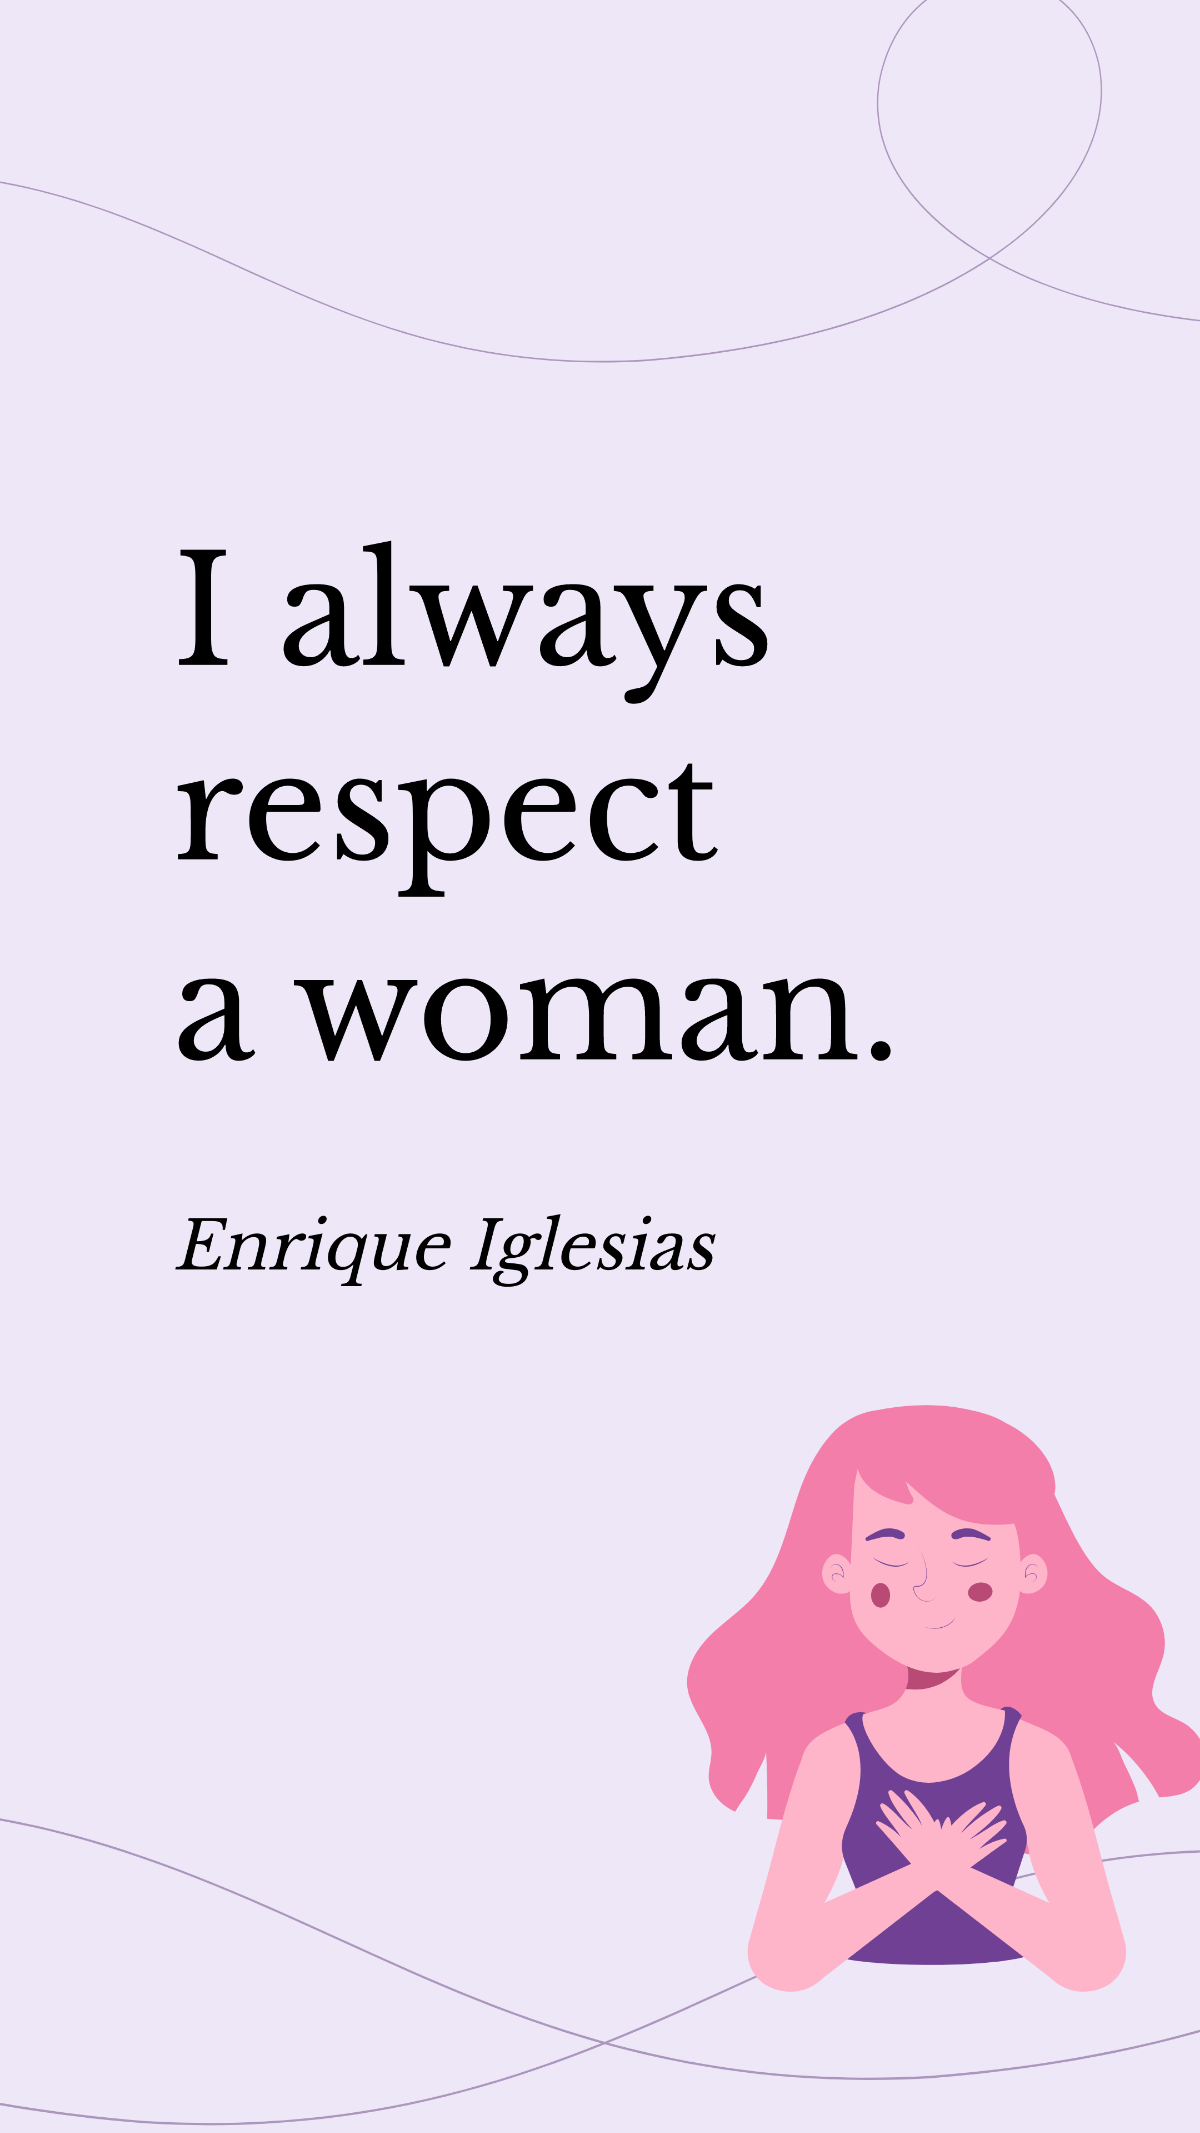 Enrique Iglesias - I always respect a woman. Template